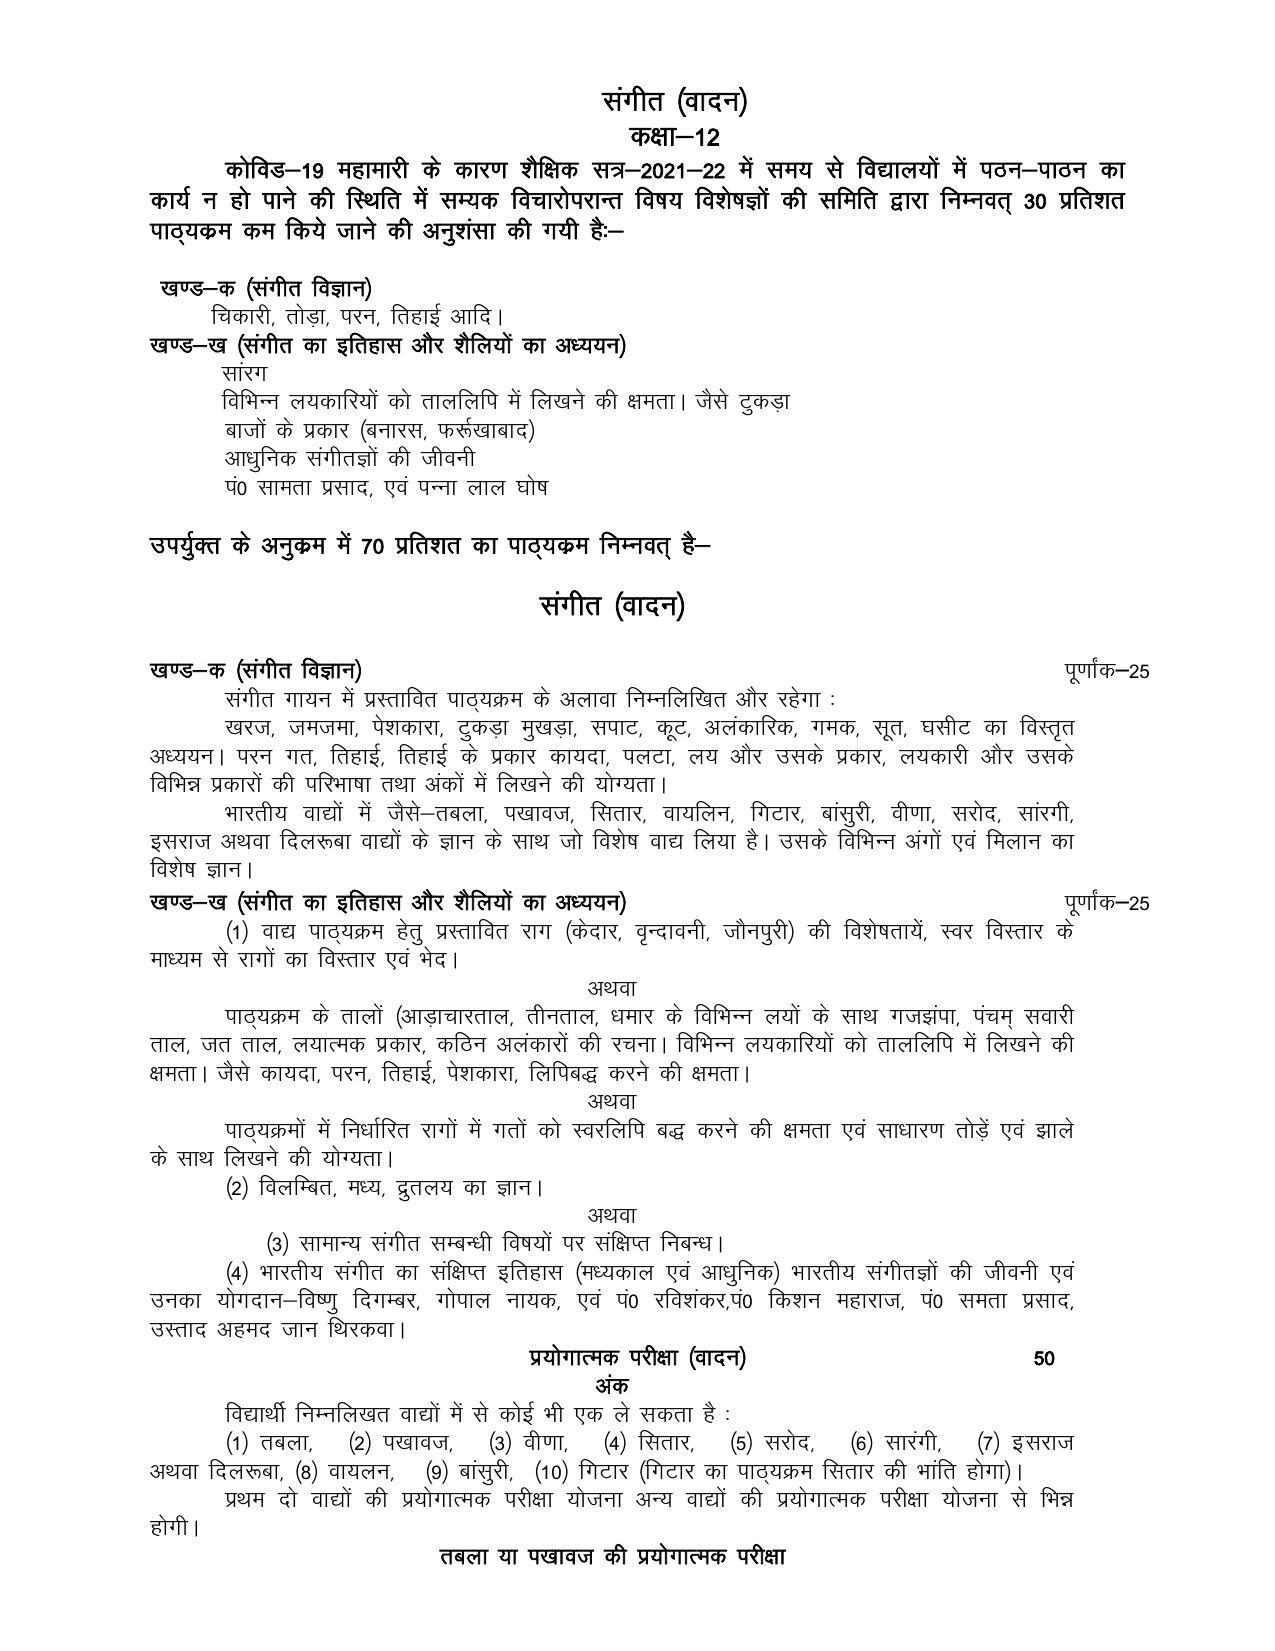 UP Board Class 12 Syllabus Sangeet (Vadan) - Page 1